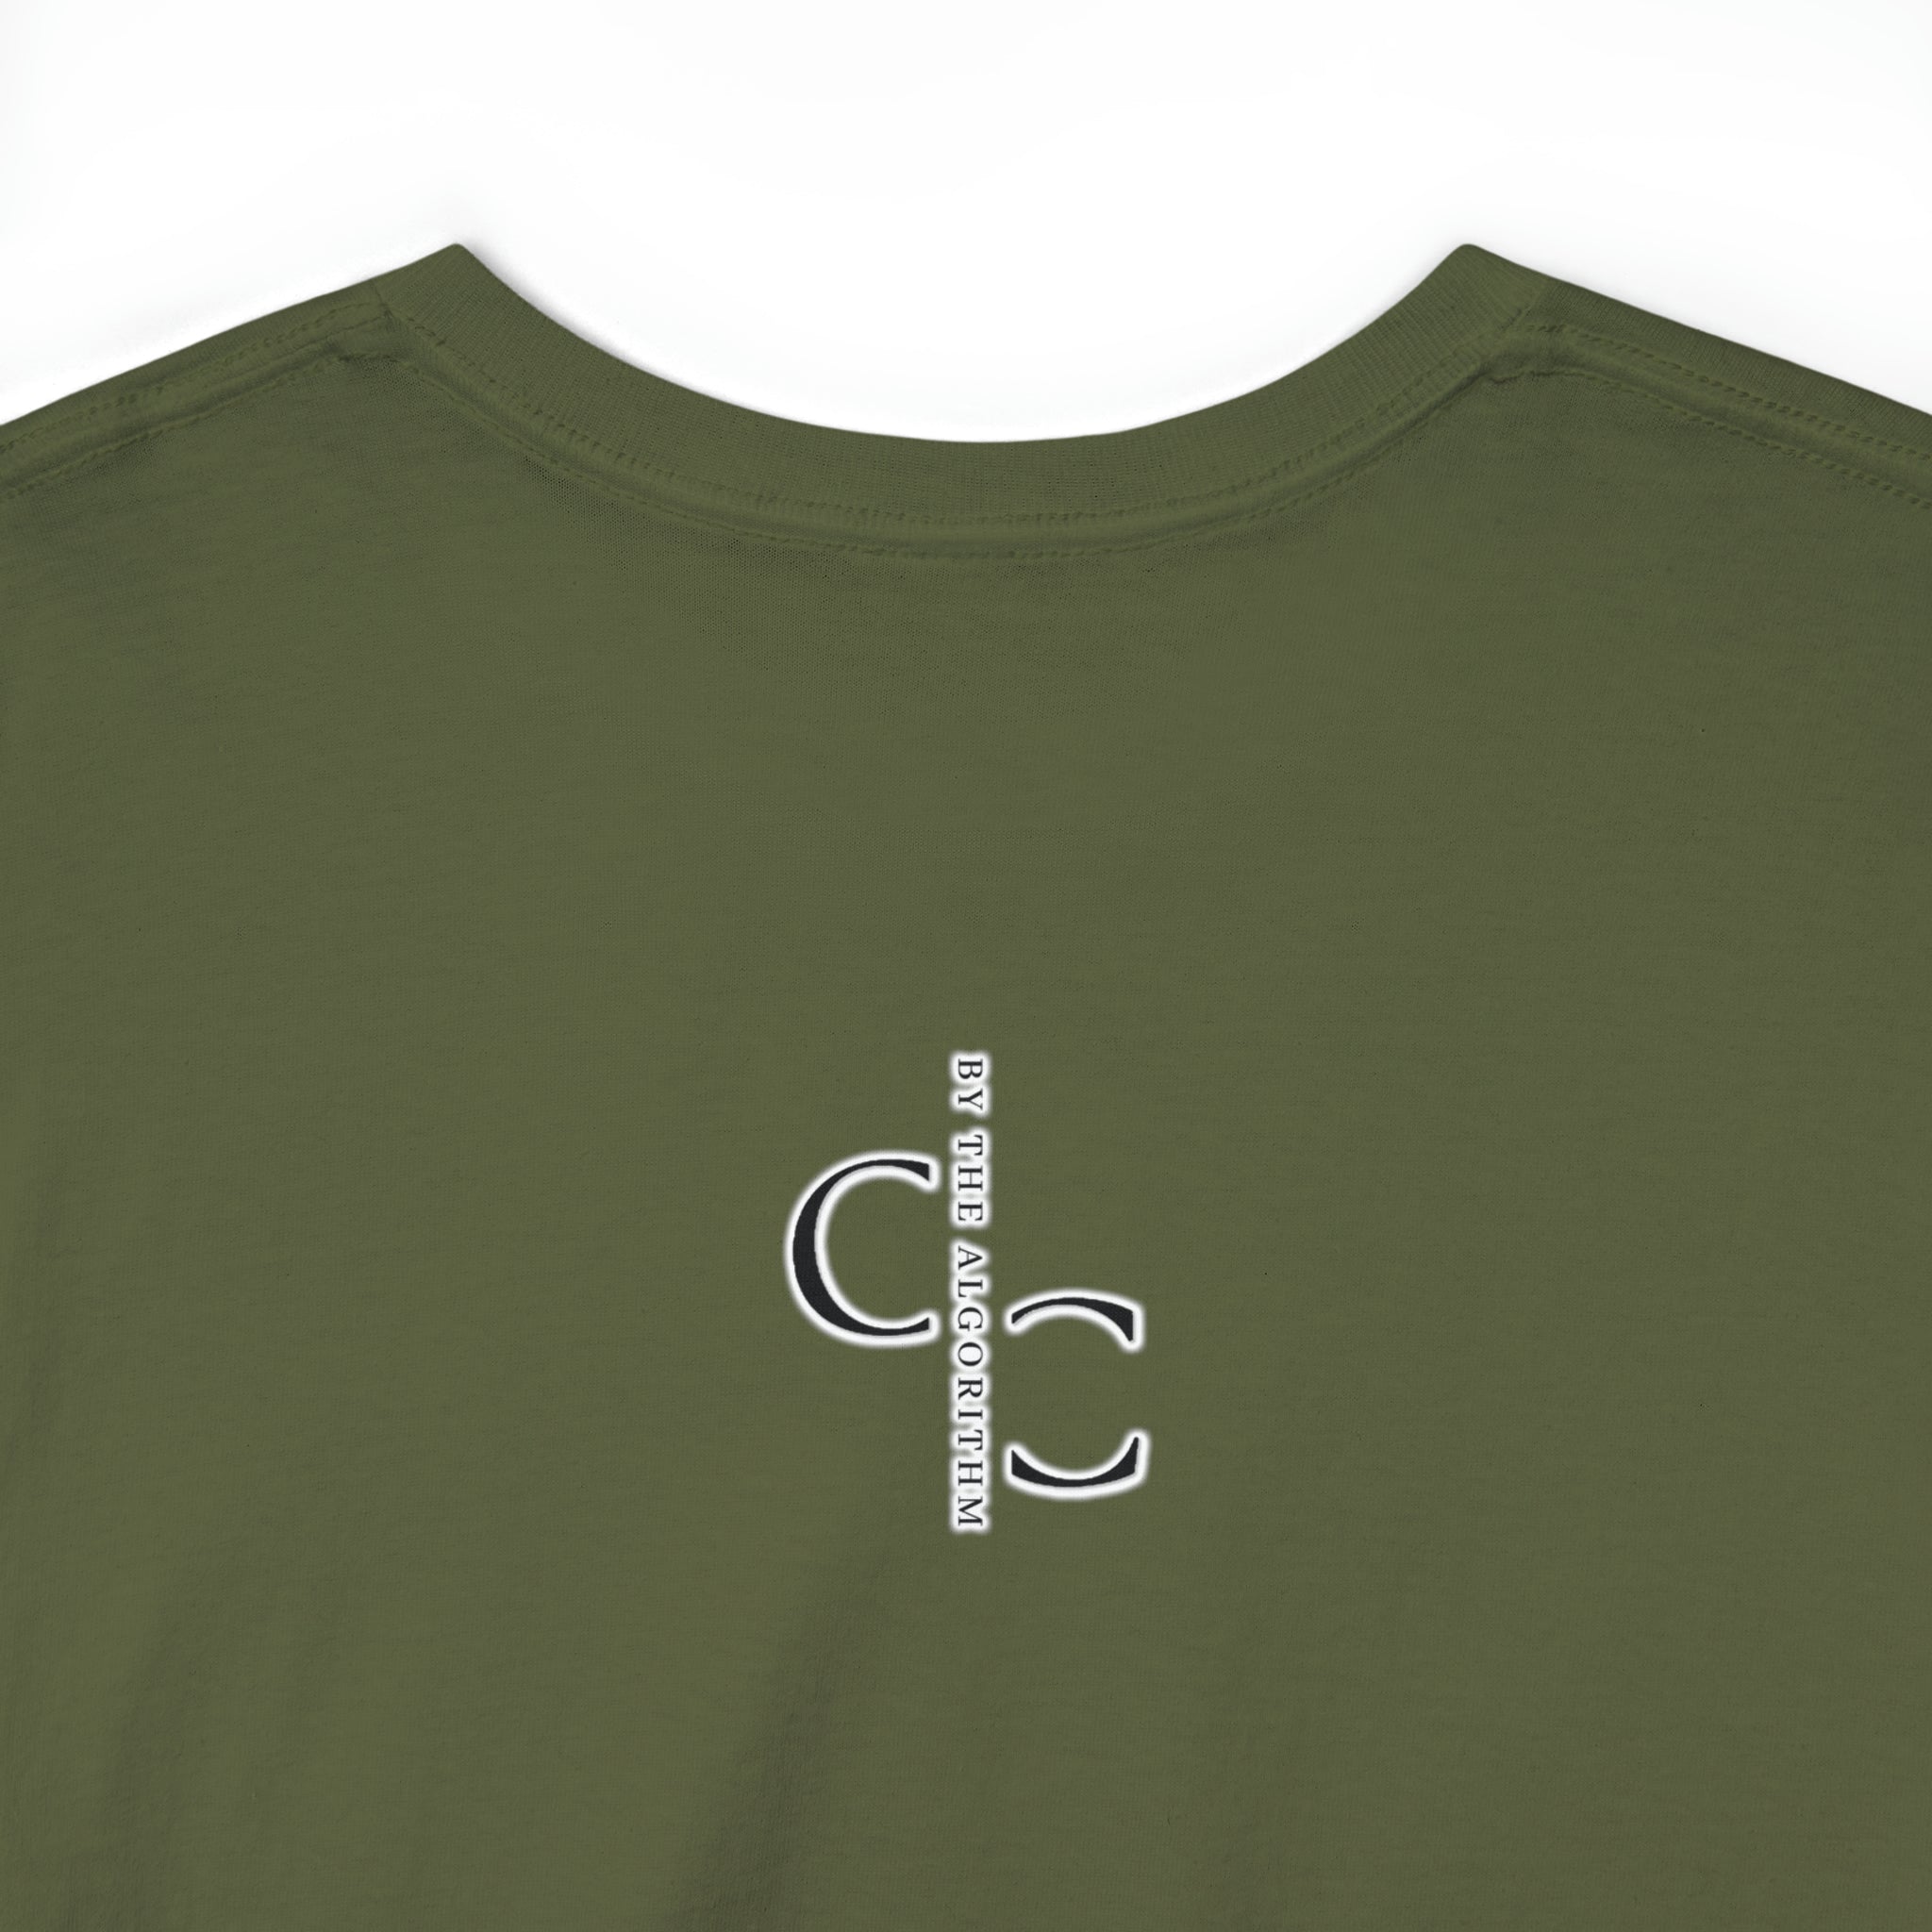 Chai is Tea-riffic T-Shirt Design by C&C